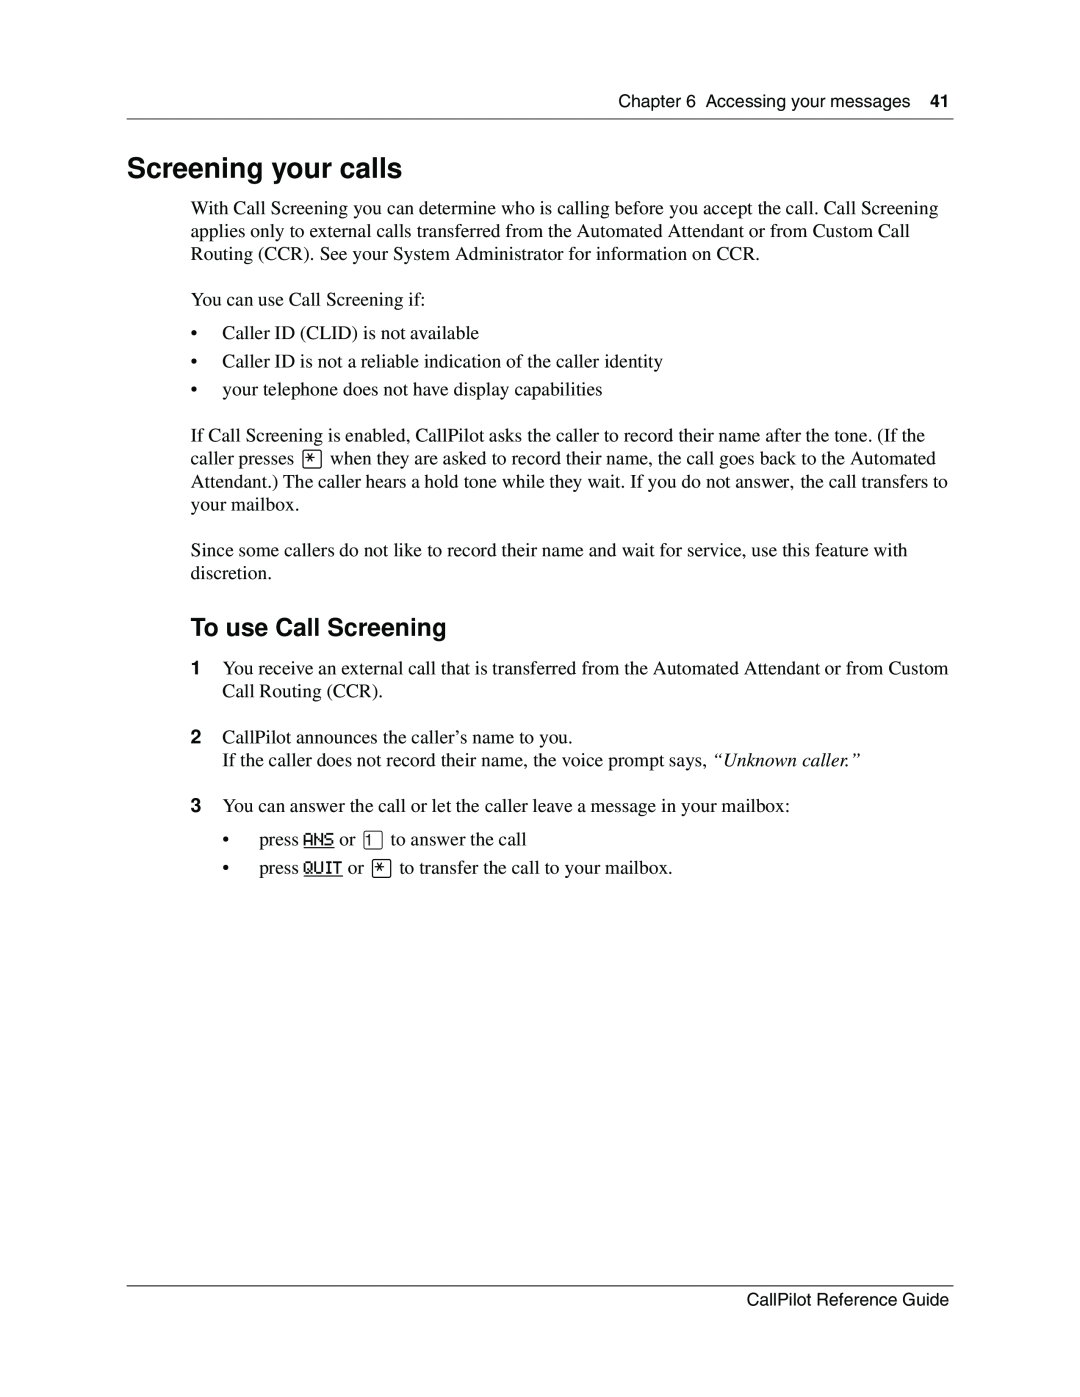 Nortel Networks CallPilot manual Screening your calls, To use Call Screening 